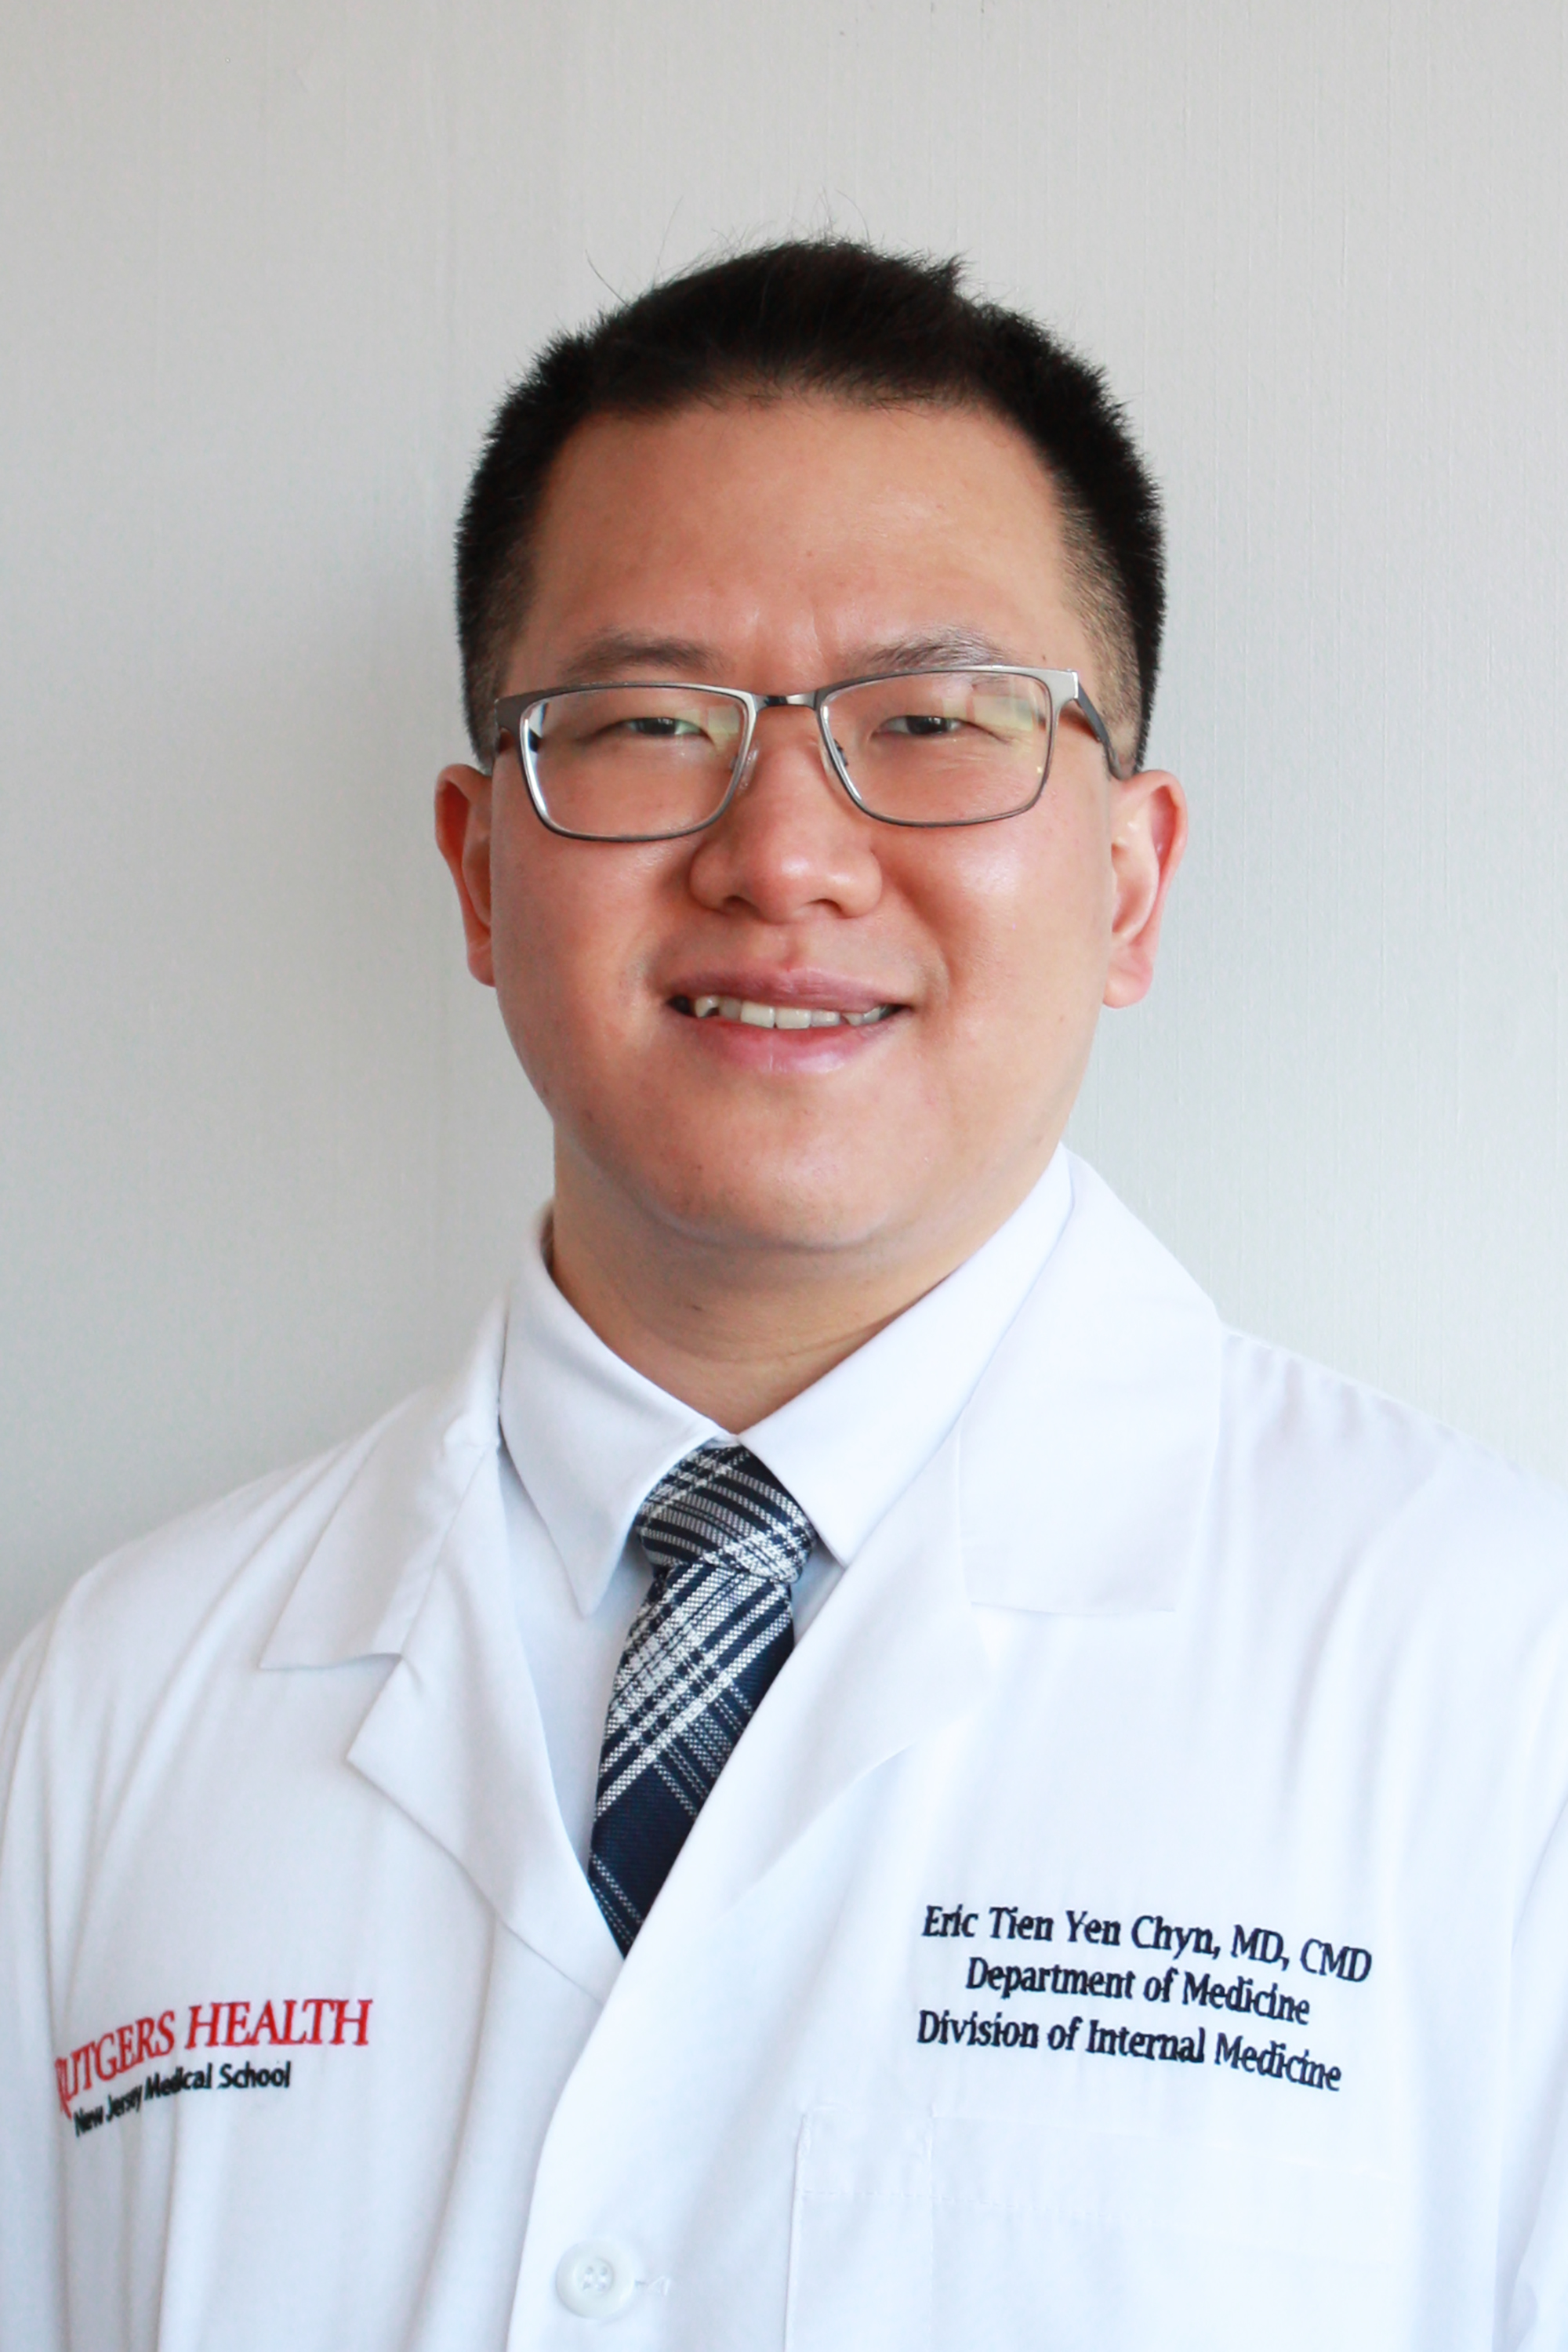 Eric Tien Yen Chyn, MD, CMD